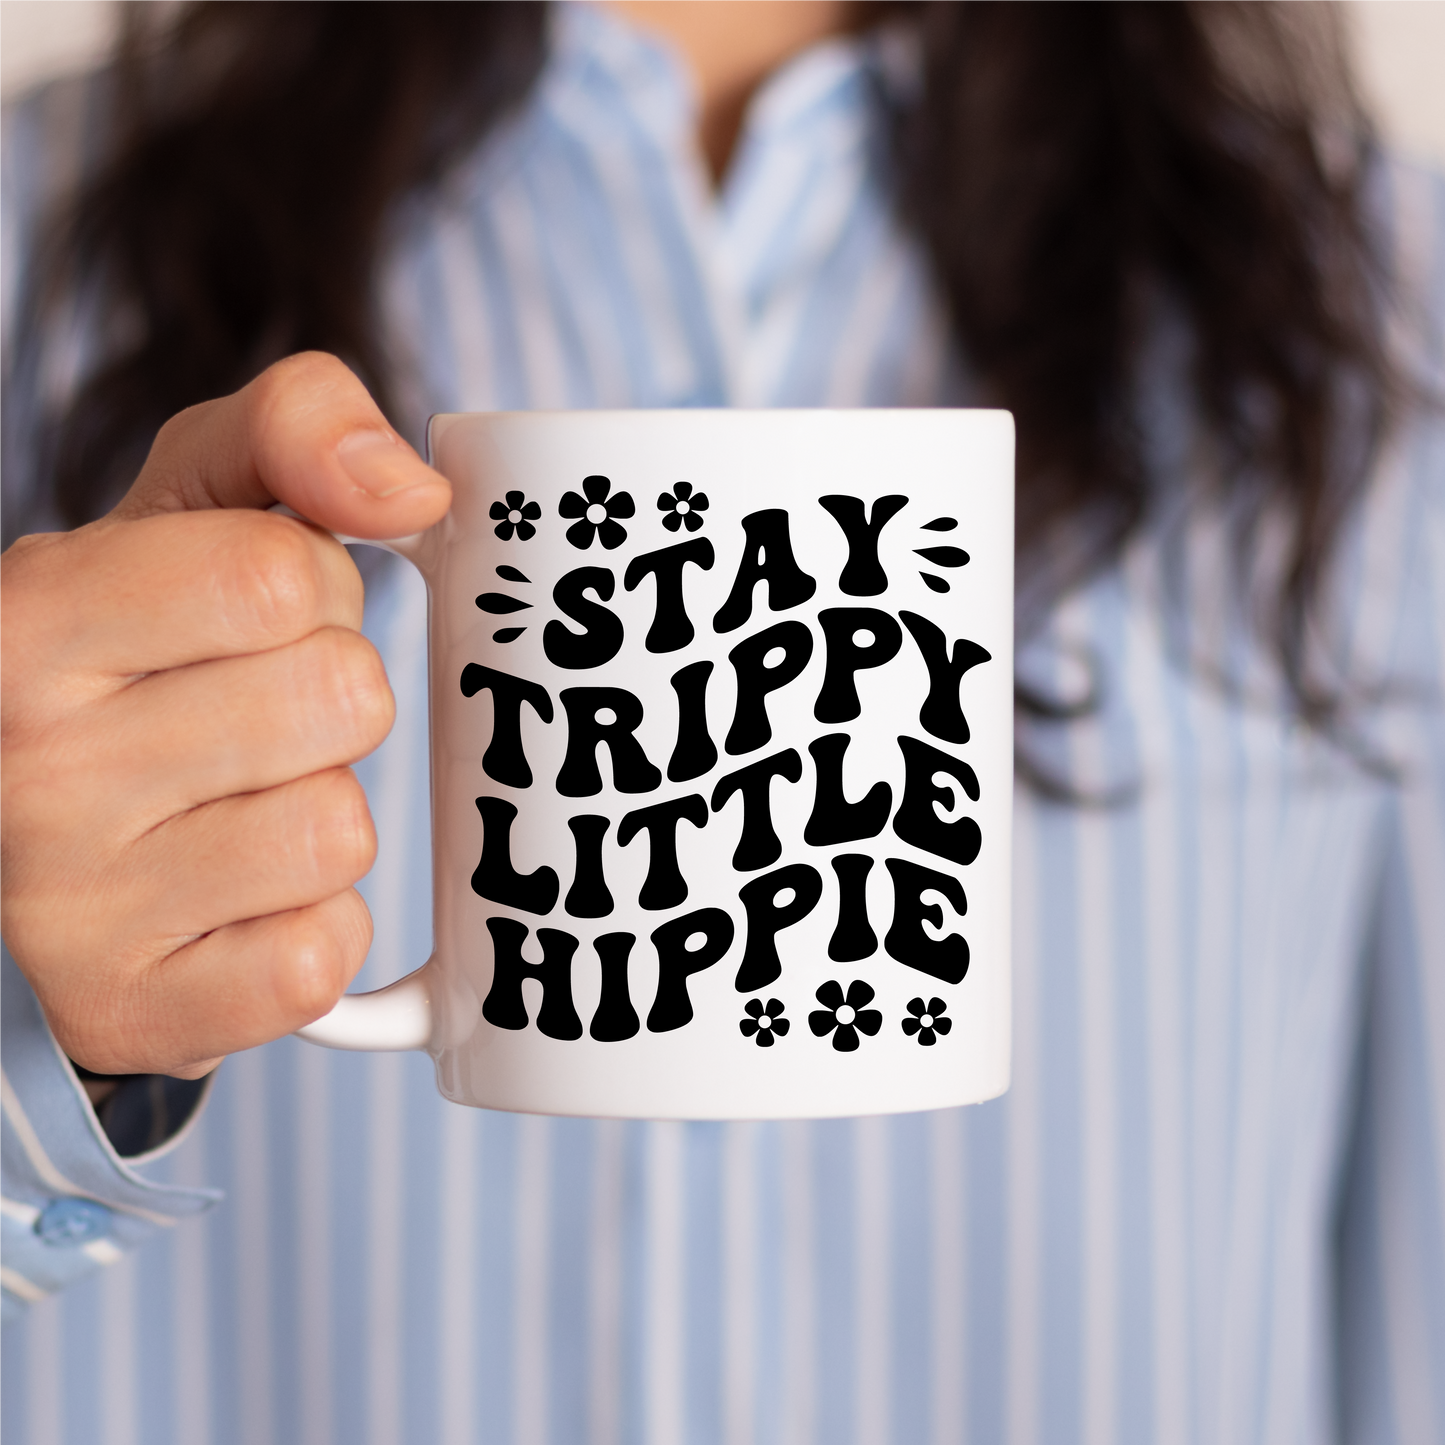 Stay Trippy Little Hippie Coffee Mug